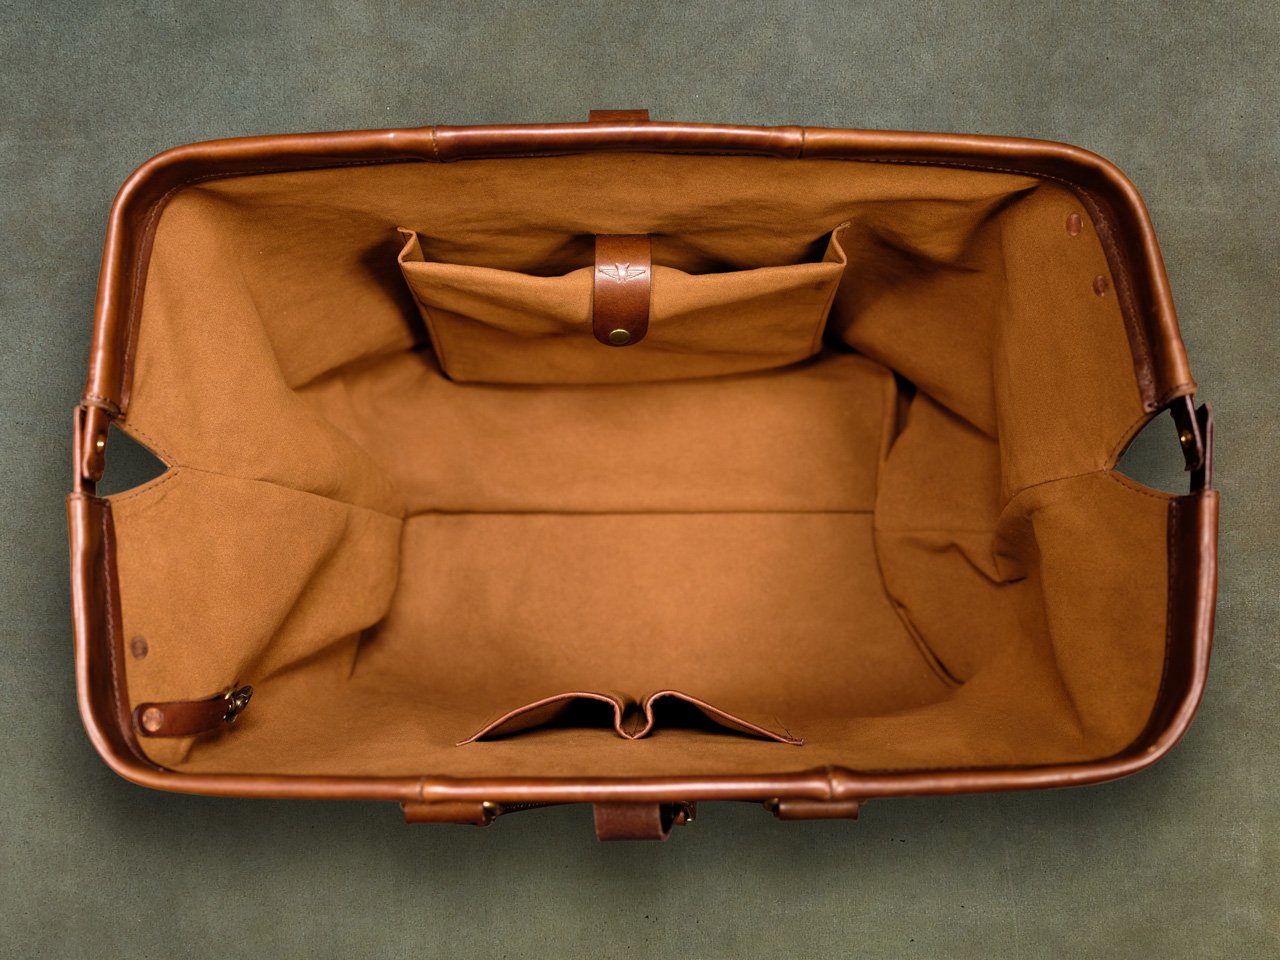 Leather Duffle Bag - Men's Brown Weekender Bag from Satchel & Page